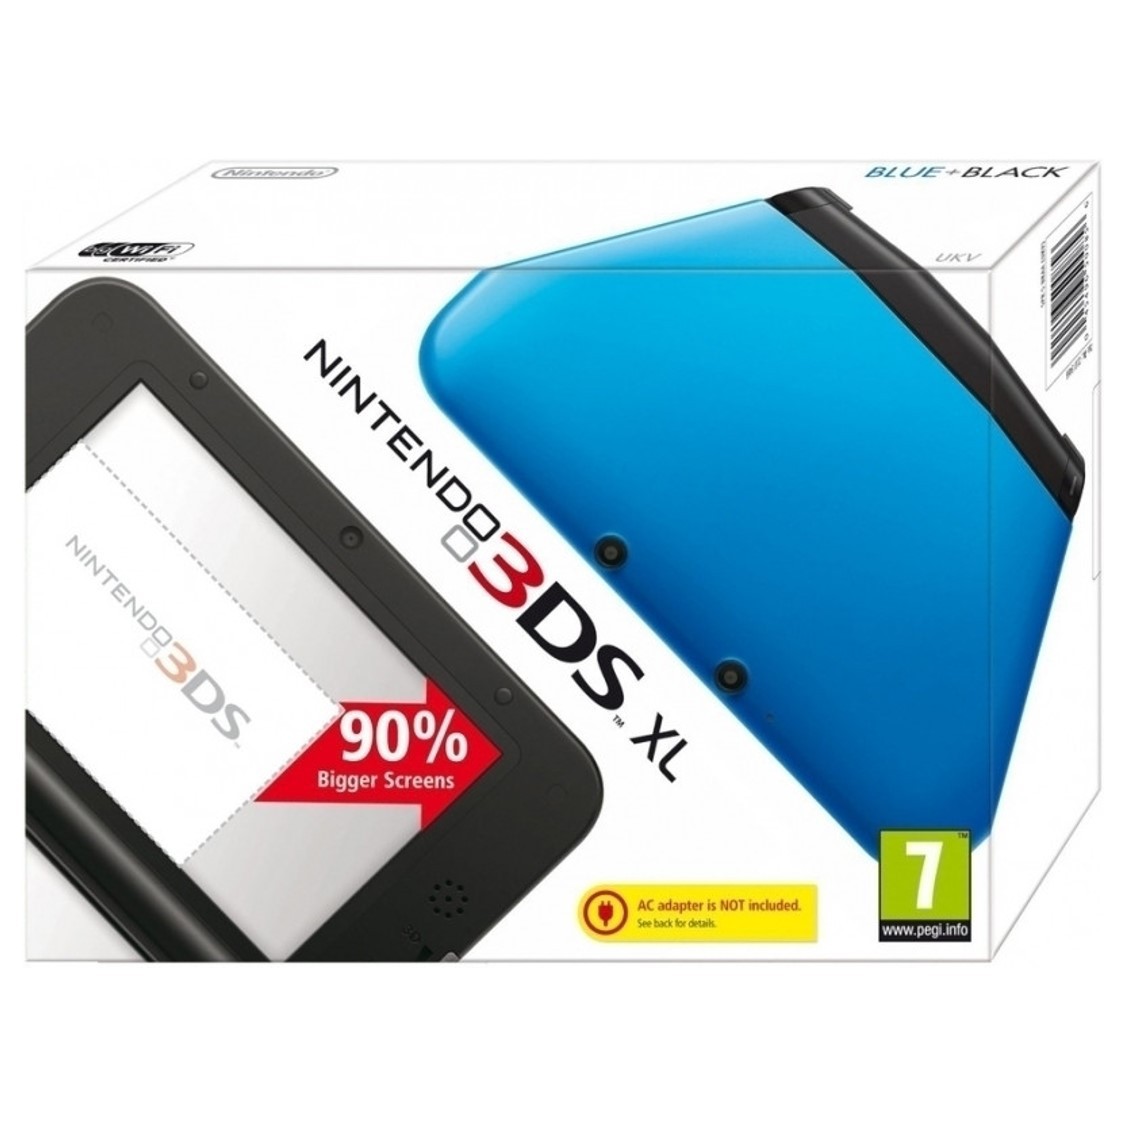 Nintendo 3DS XL - Blue/Black [Complete] - Nintendo 3DS Hardware